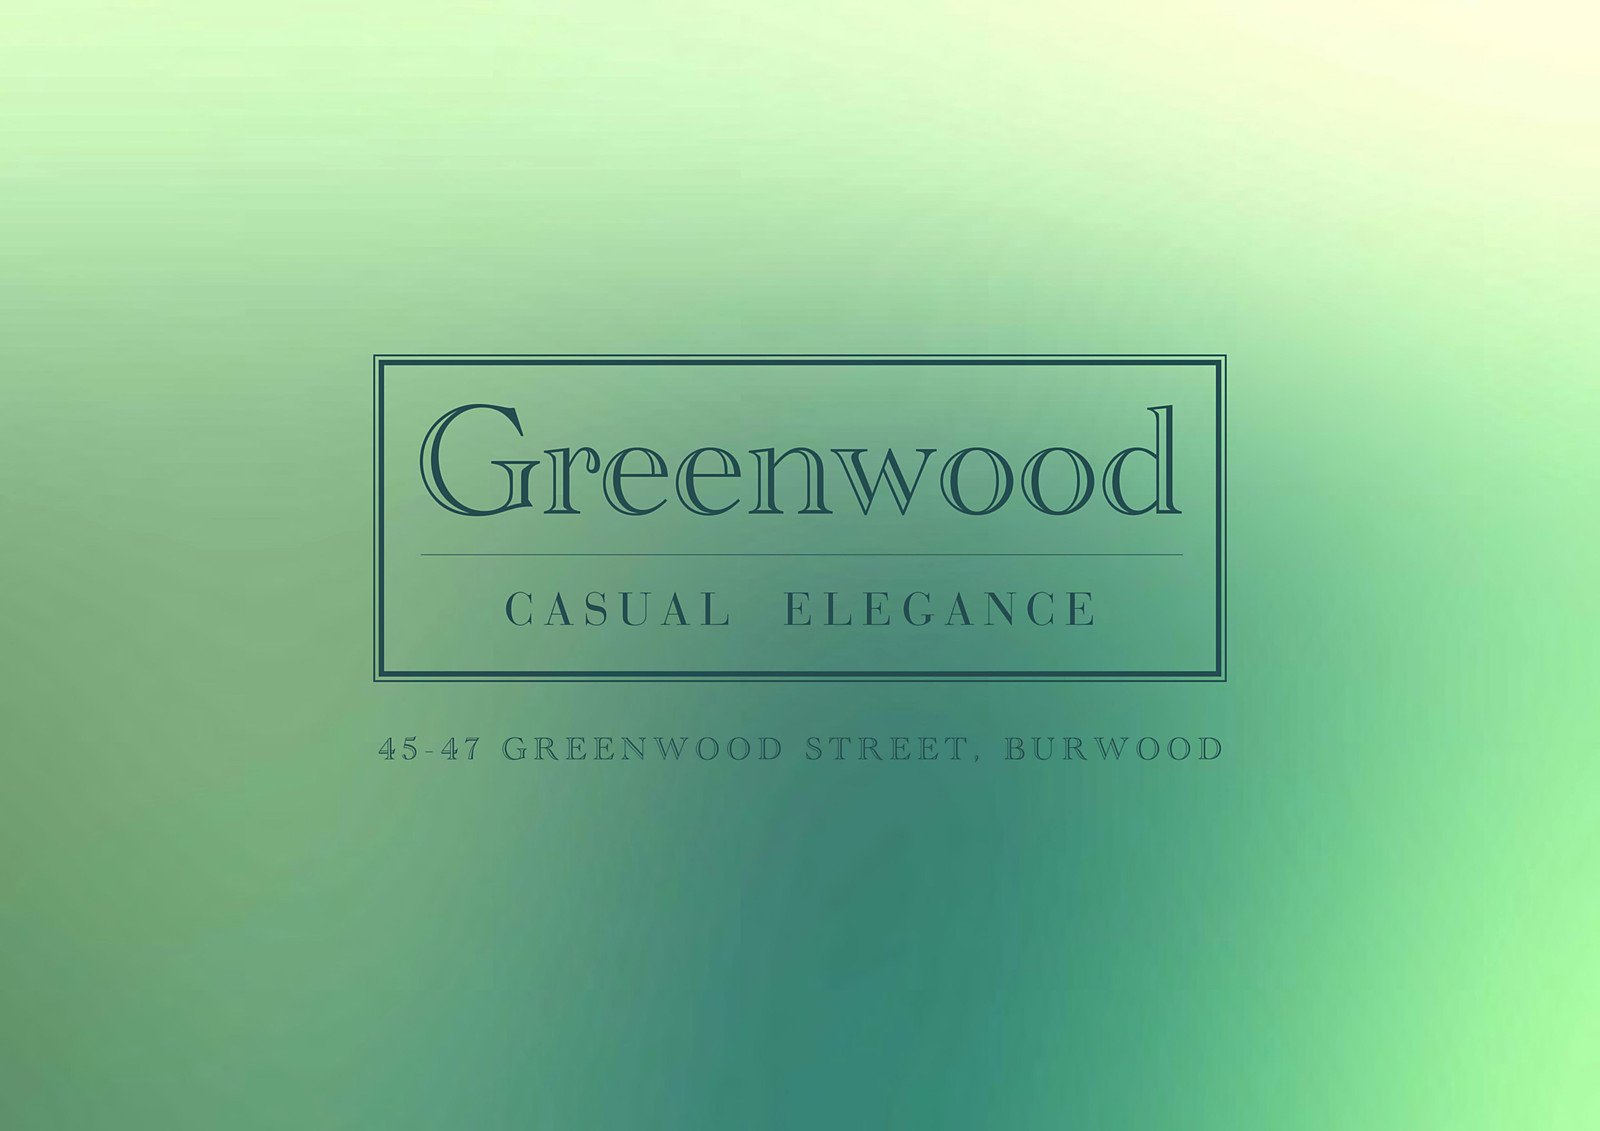 45-47 Greenwood Street, Burwood image 2